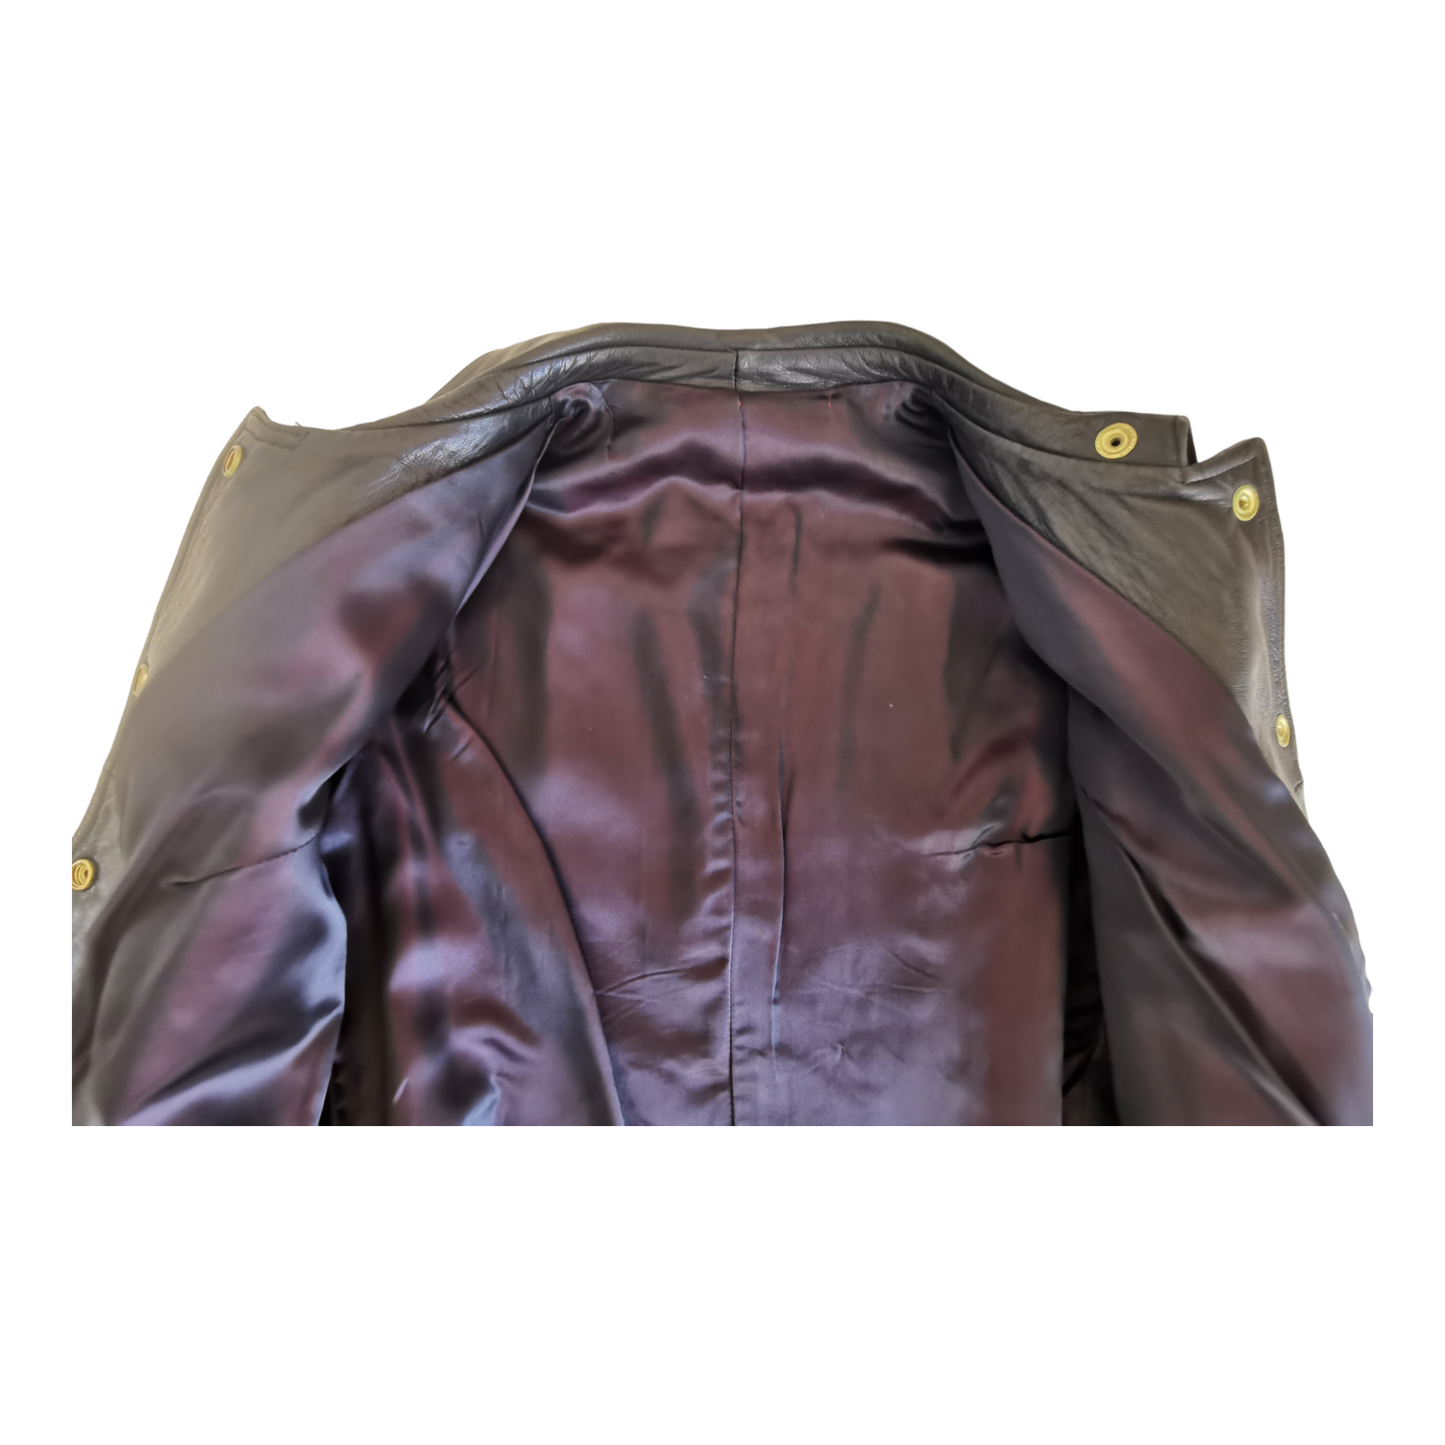 1970s Vintage women's black leather coat saddle pockets